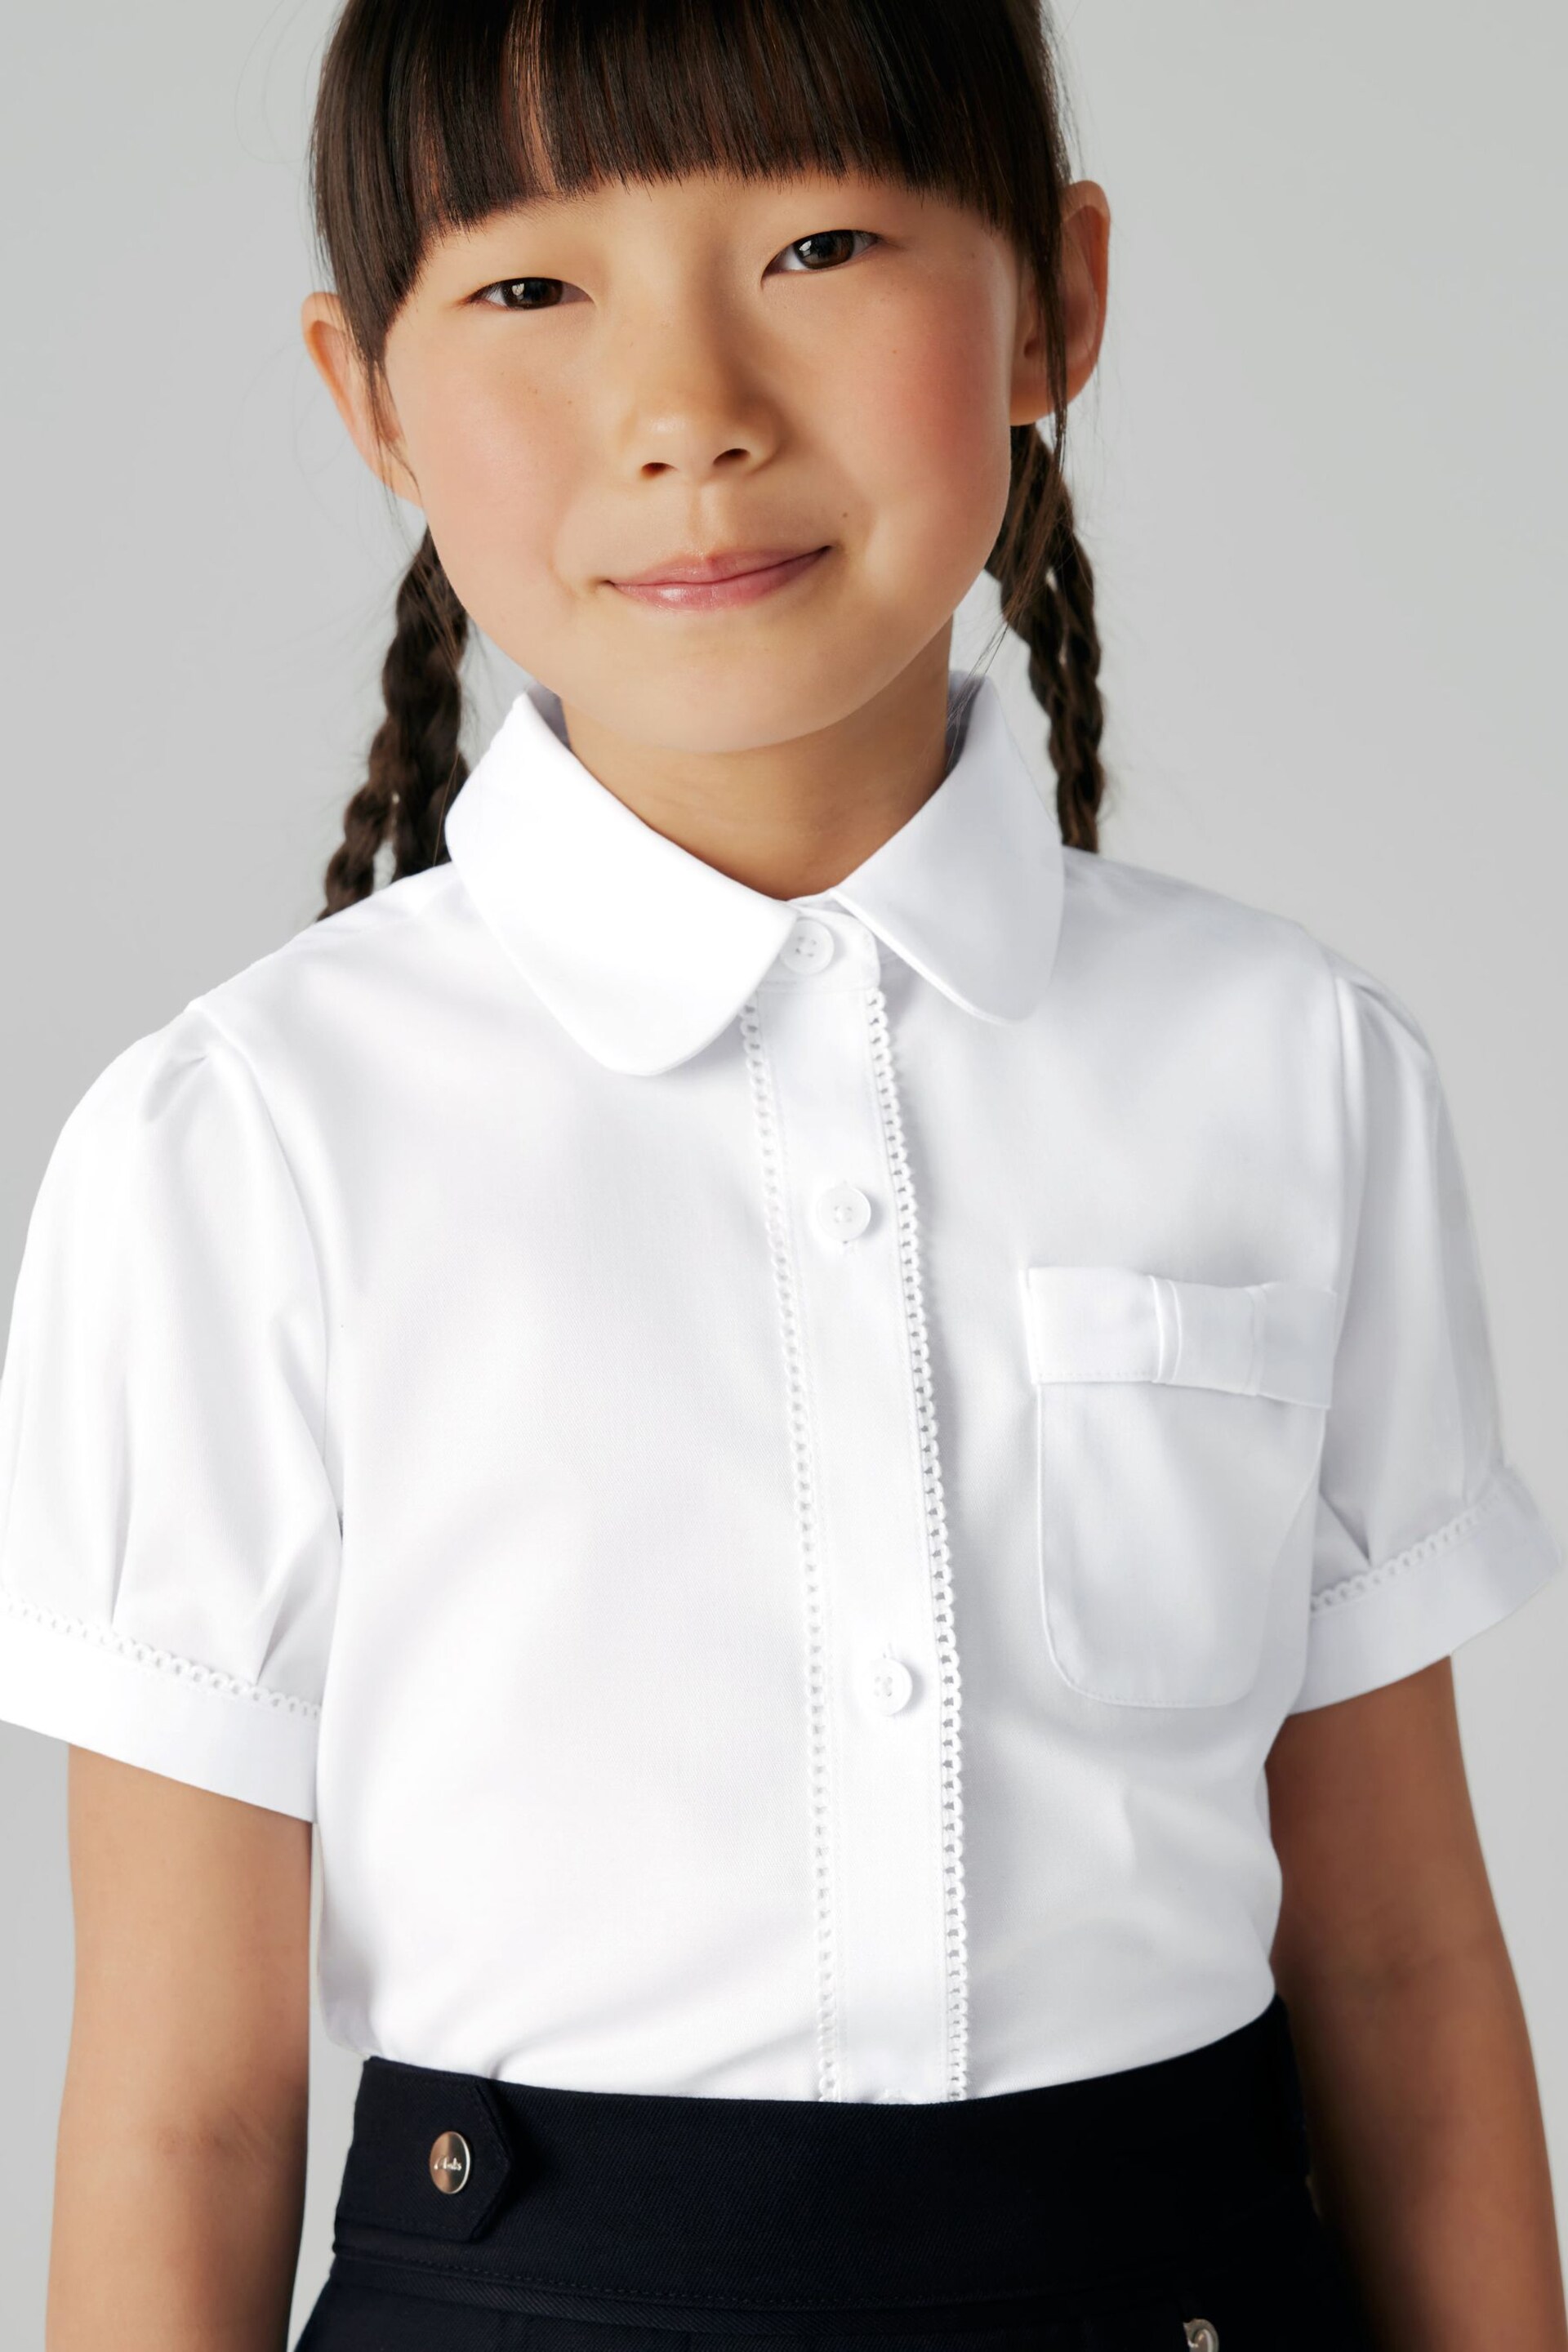 Clarks White Short Sleeve Girls Lace Trim School Shirt - Image 2 of 11